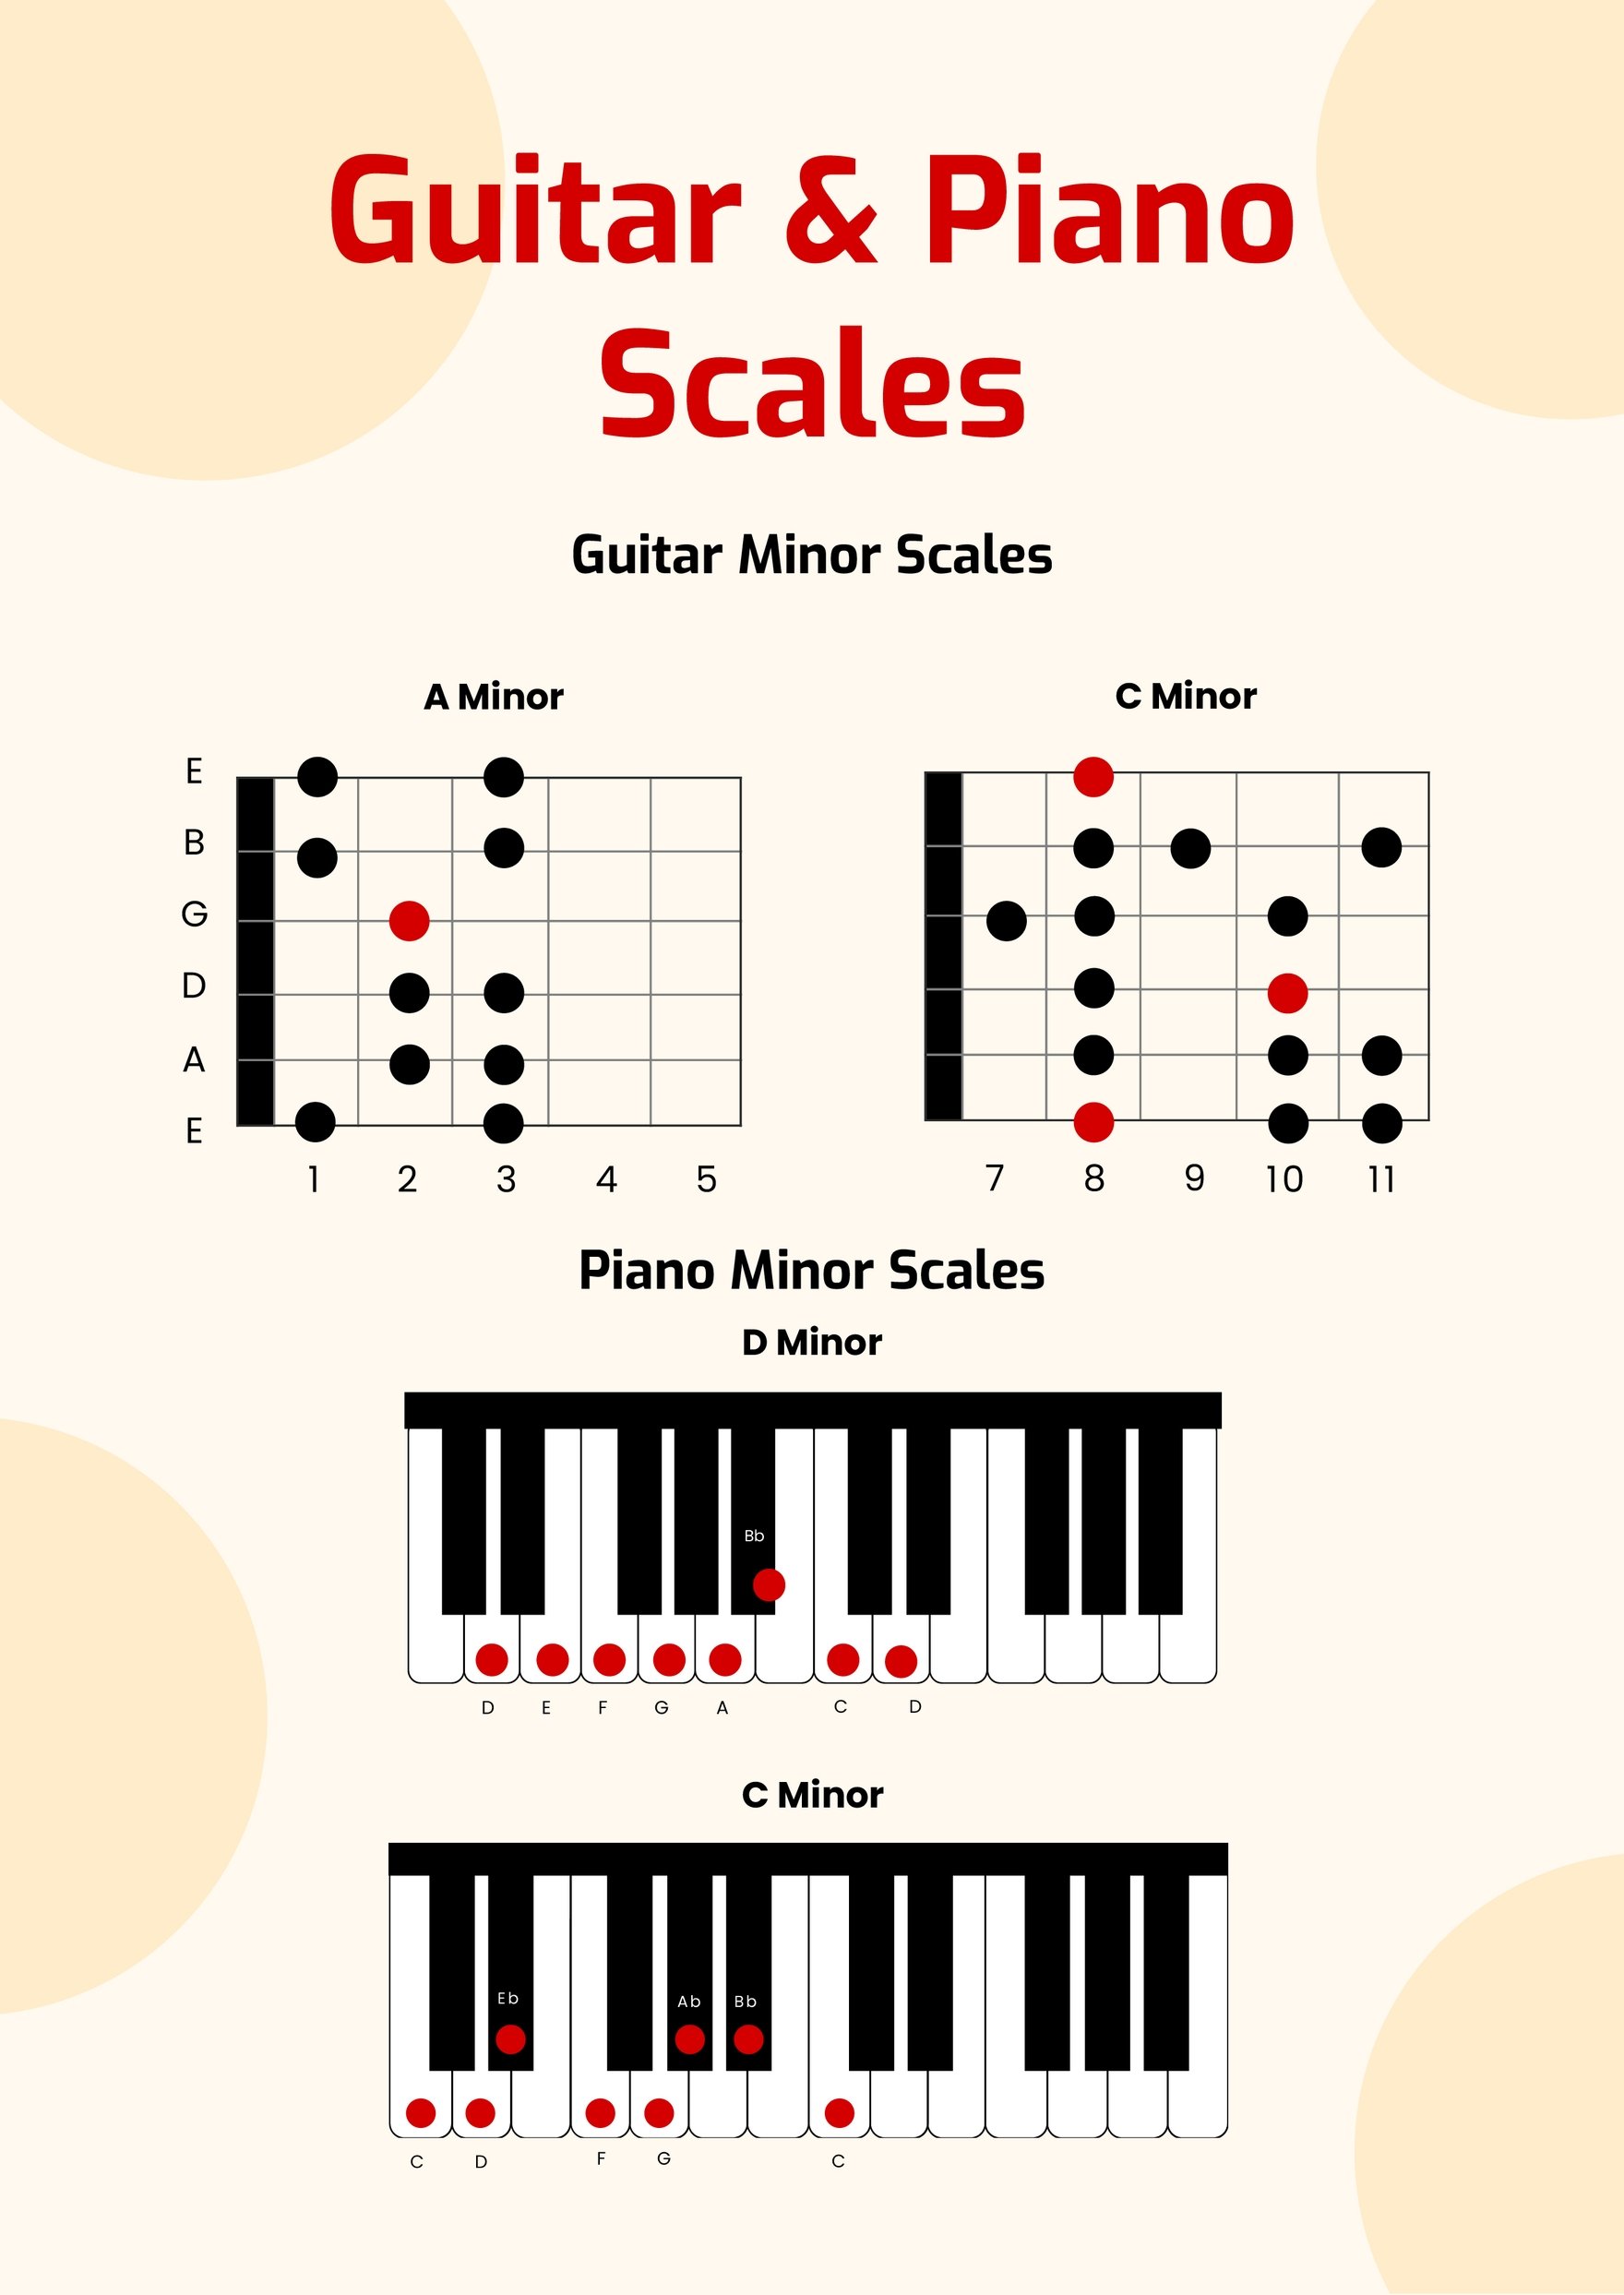 Guitar & Piano Scales Chart in PDF, Illustrator